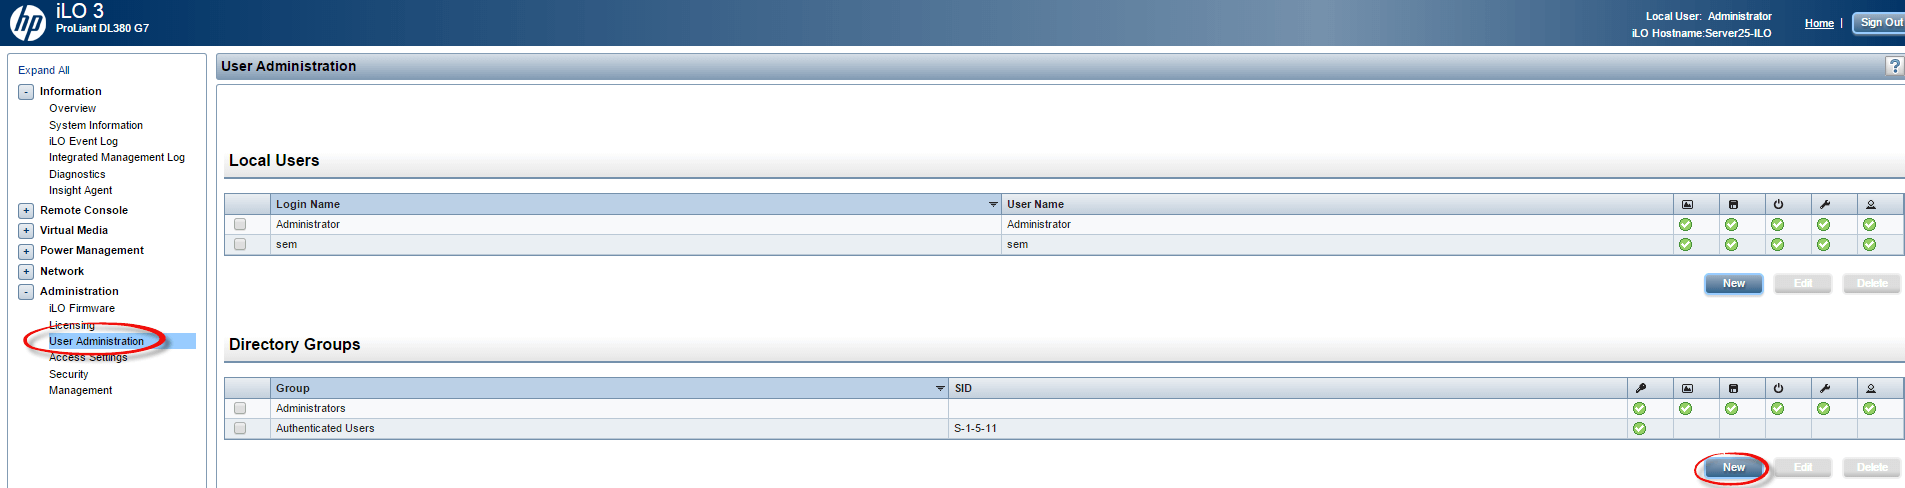 Как настроить аутентификацию Active Directory на HP iLO 3 через WEB интерфейс ILO-01